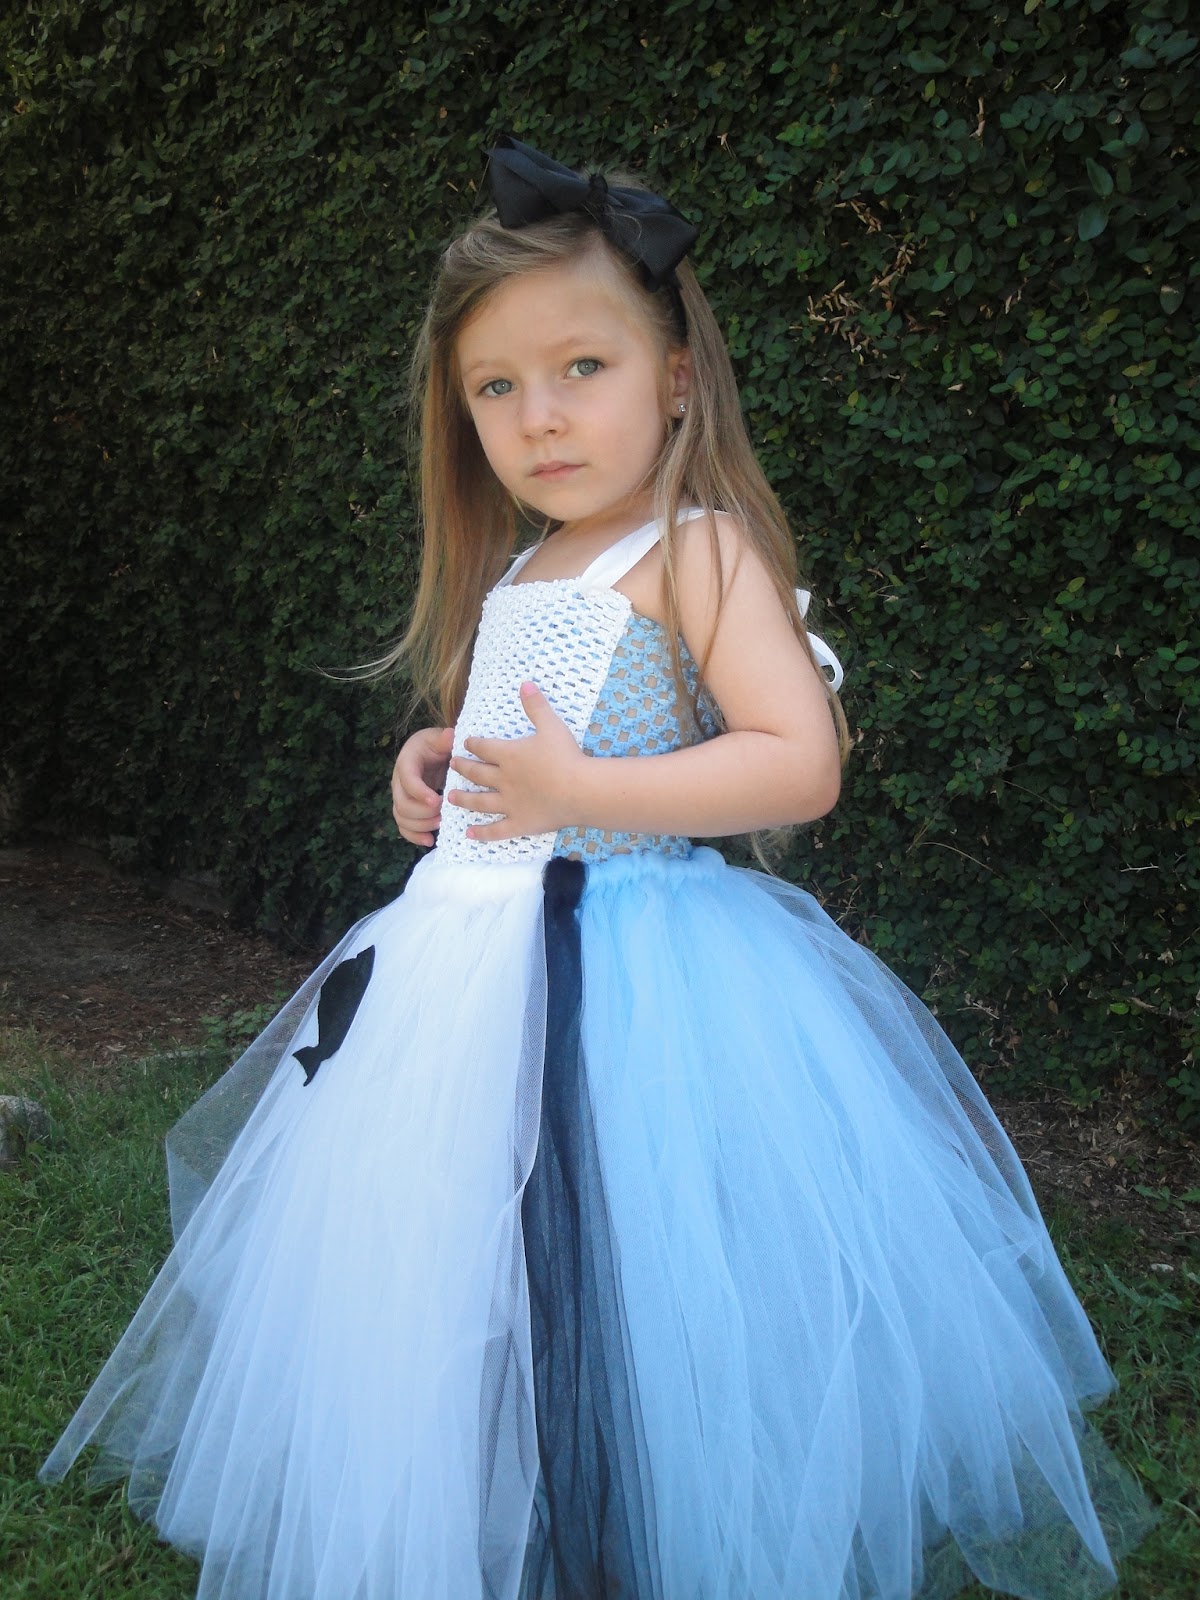 Hollywoodtutu dresses: Alice in wonderland tutu dress with matching bow